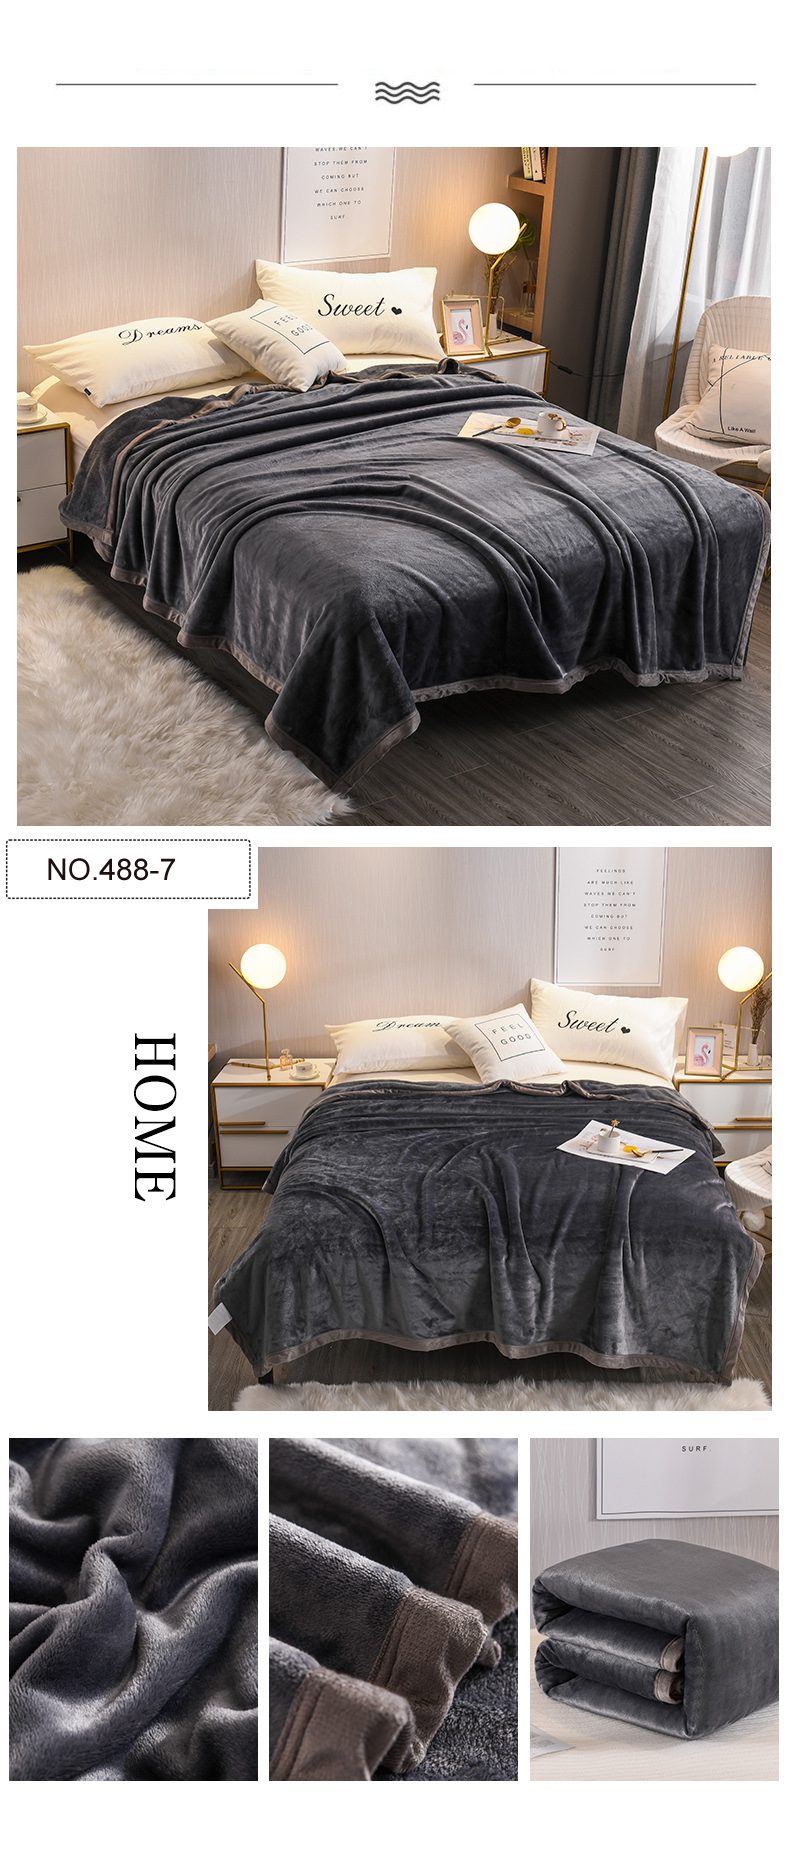 For Bedroom Picnic Blanket Cozy